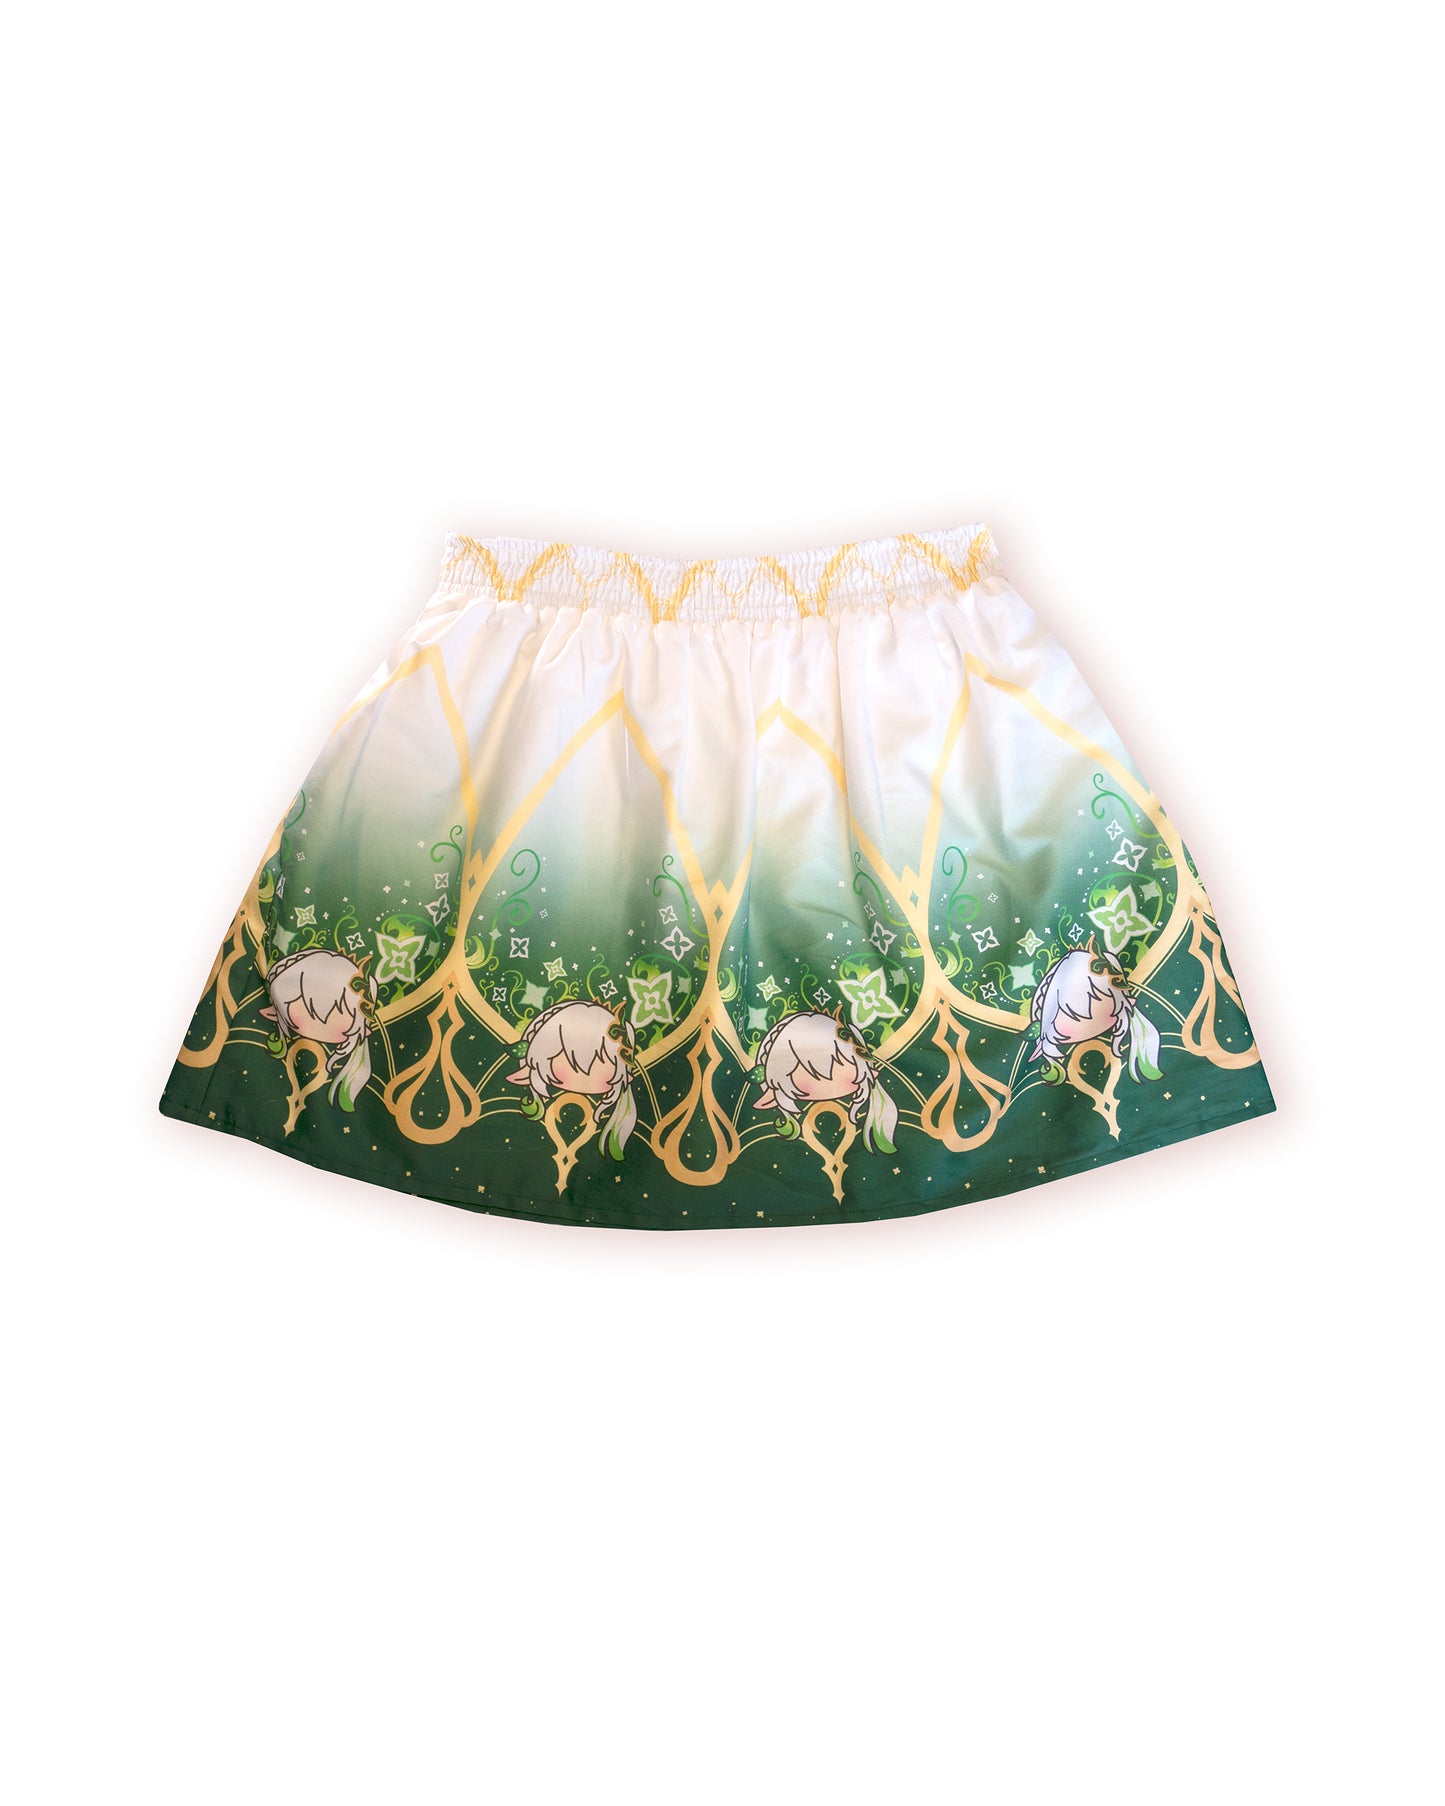 Made to order: Nahida Skirt